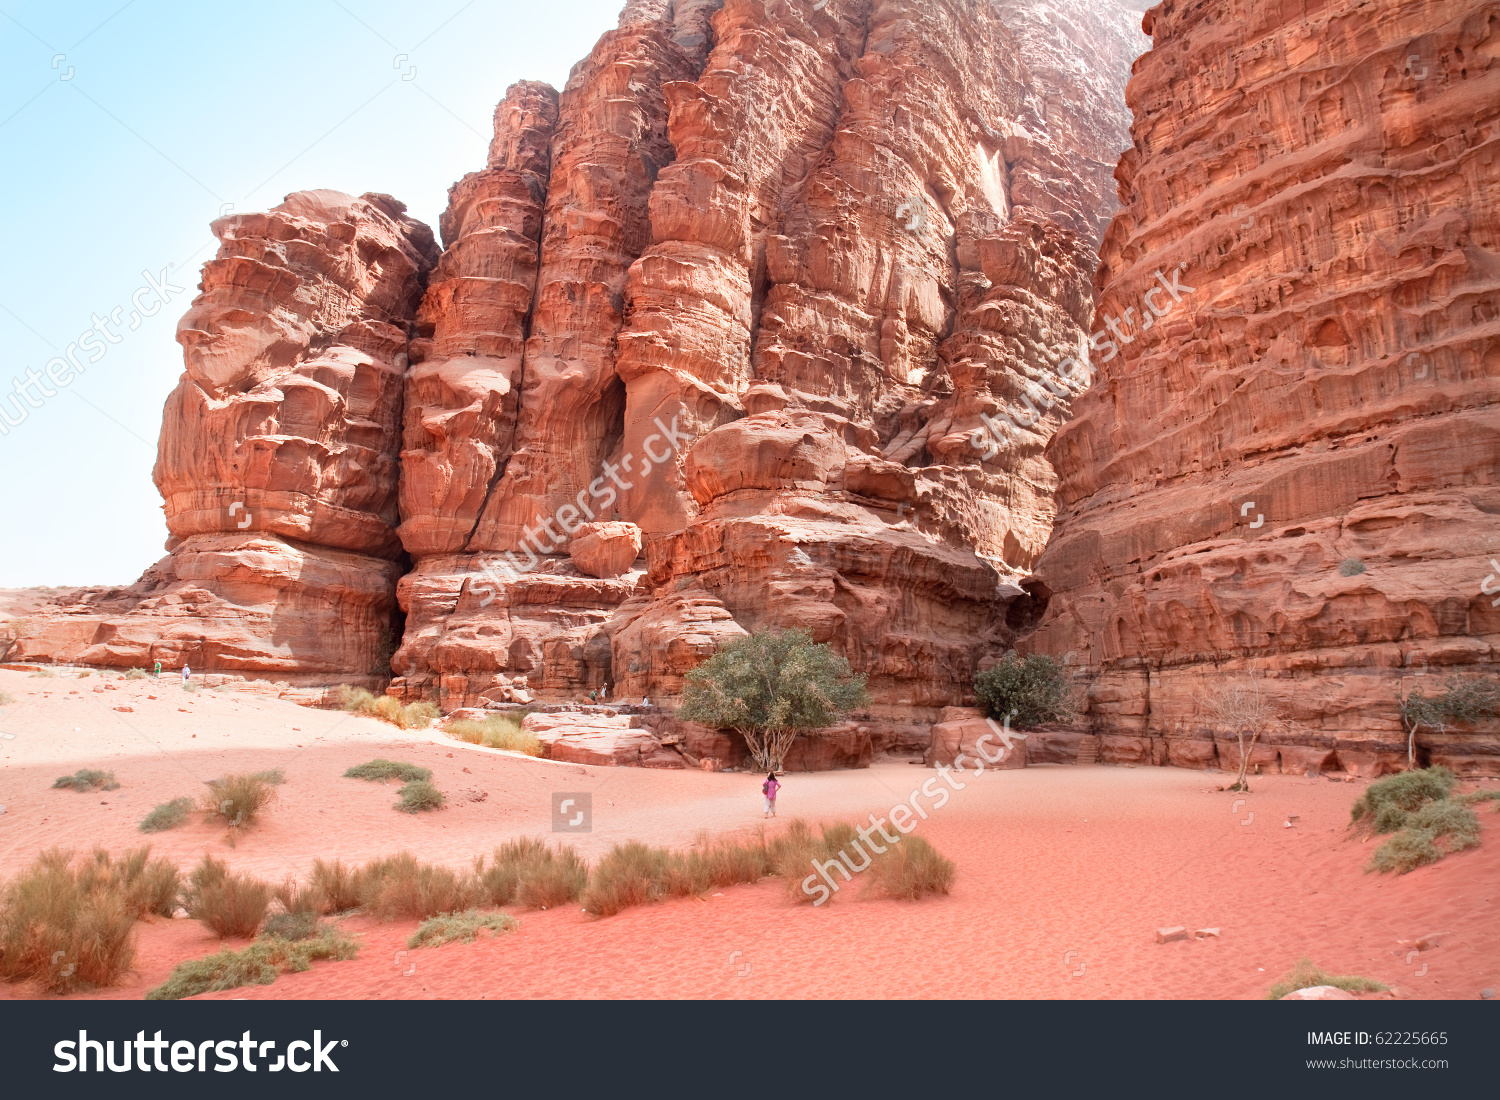 stock-photo-huge-cliff-of-khazali-canyon-in-wadi-rum-containing-many-rock-inscriptions-wadi-rum-jordan-62225665.jpg